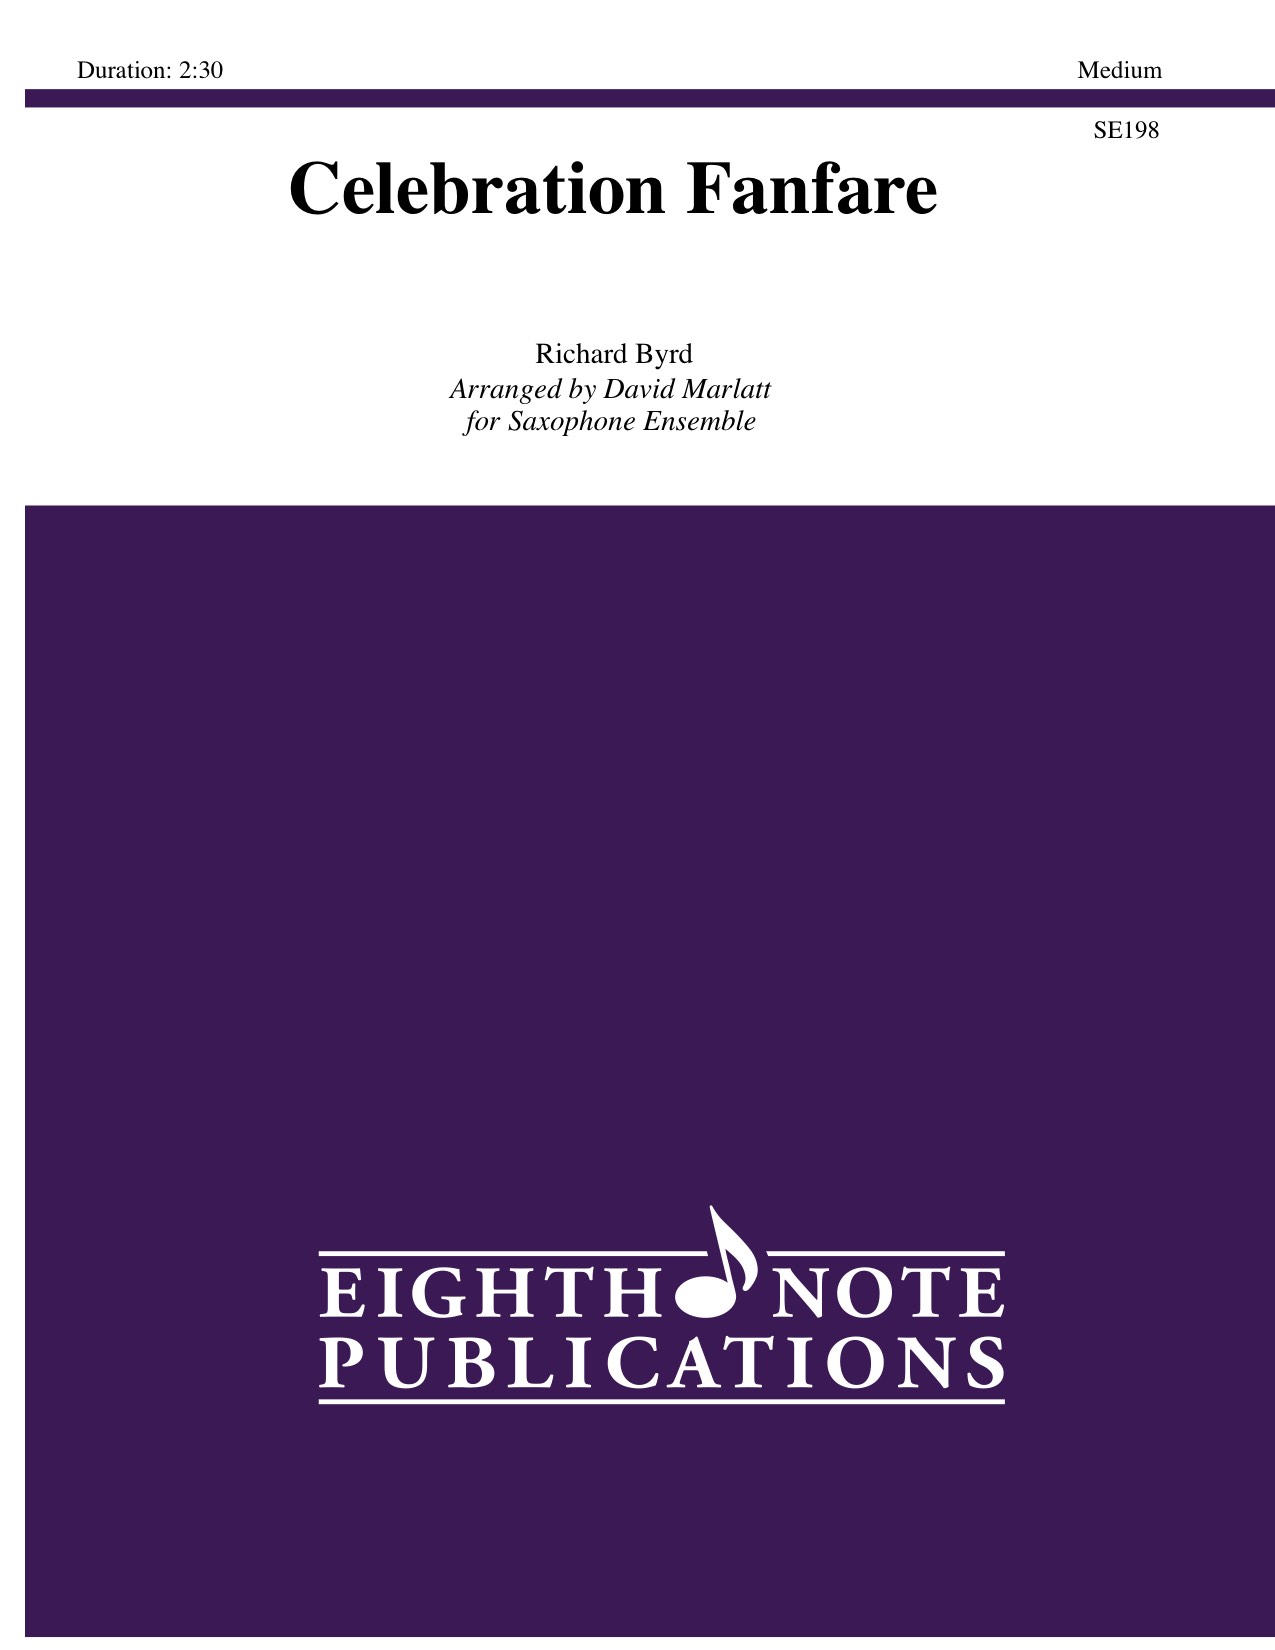 Celebration Fanfare - Richard Byrd